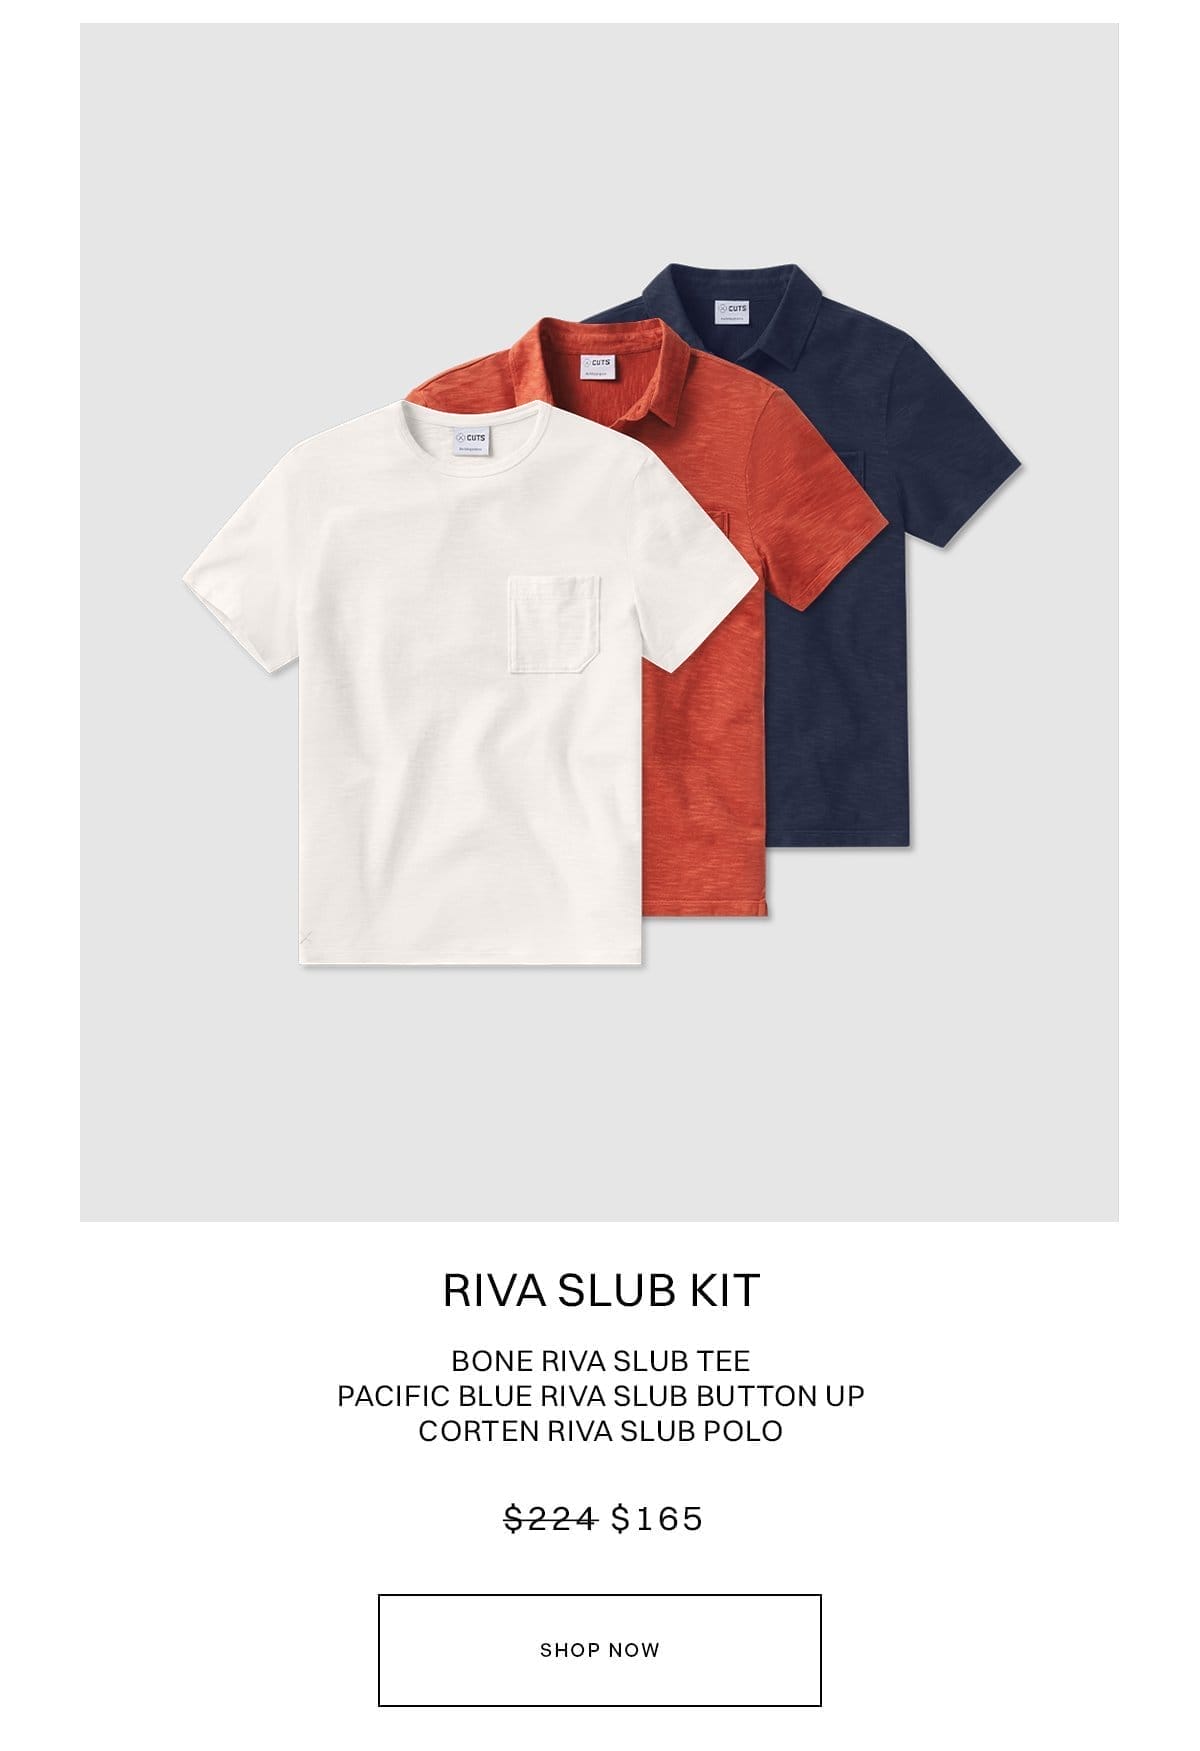 Riva Slub Kit